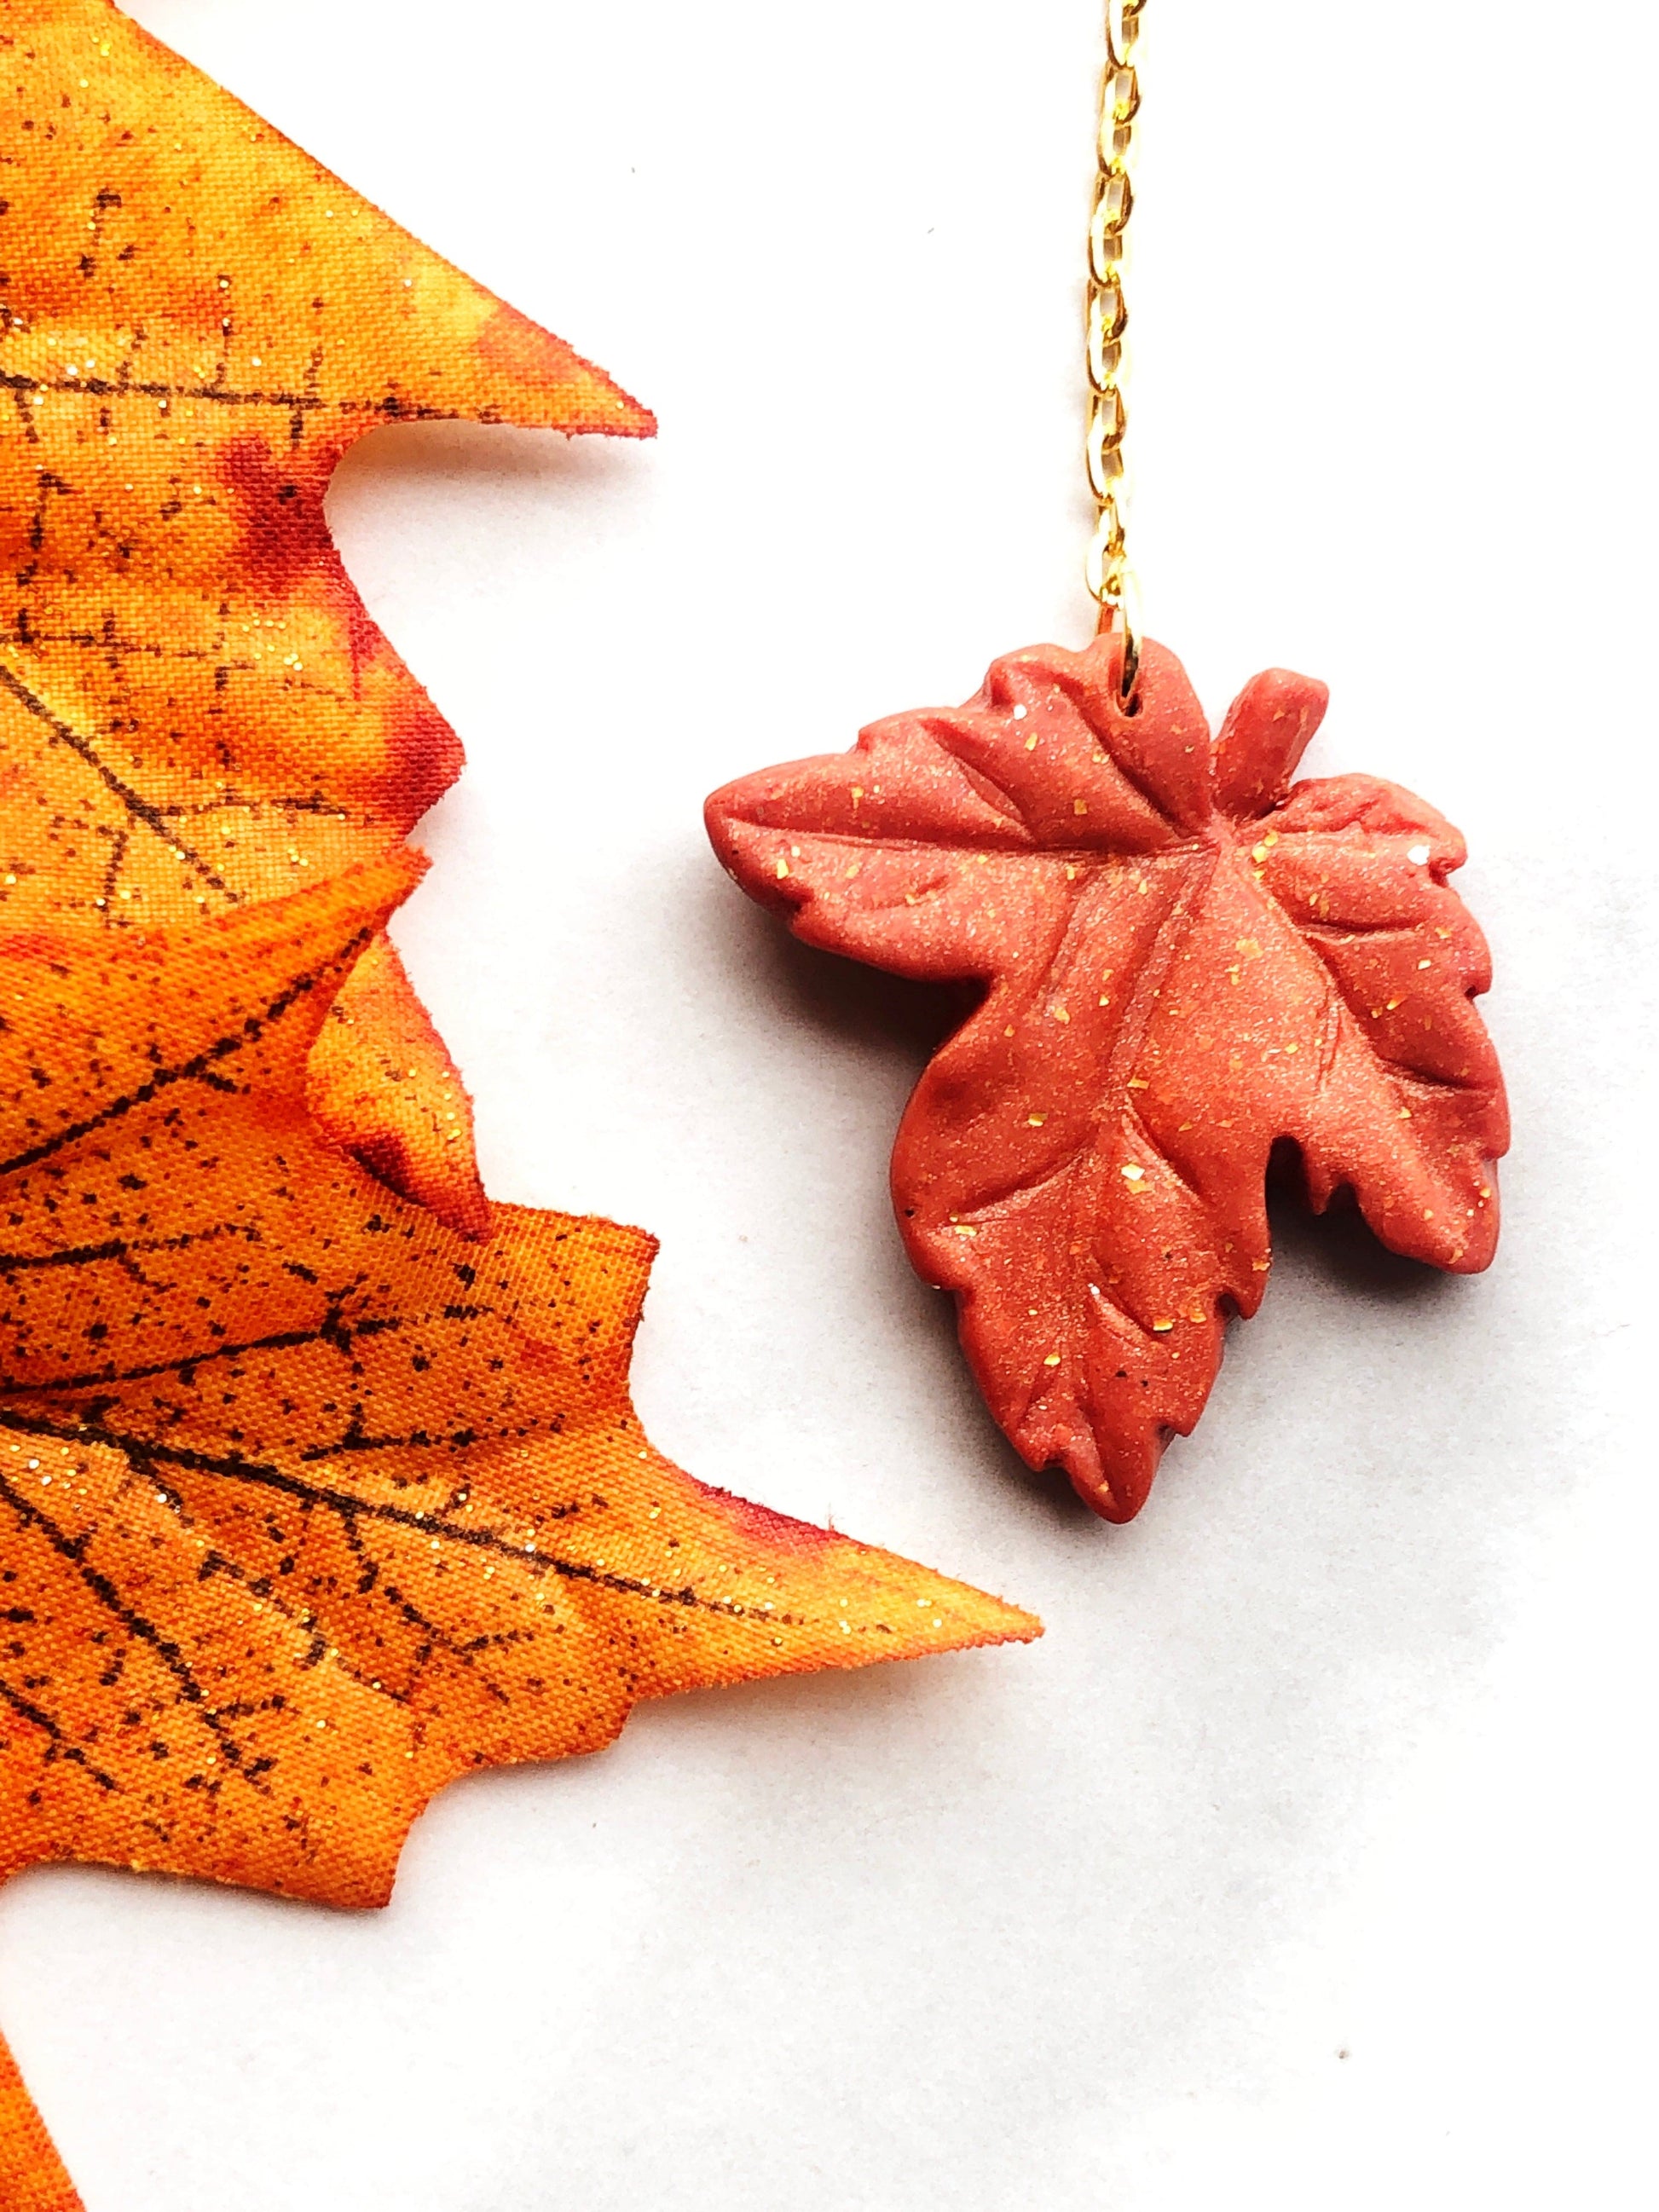 Earring Rhea - Orange Maple Leaf Earrings on Gold Chain